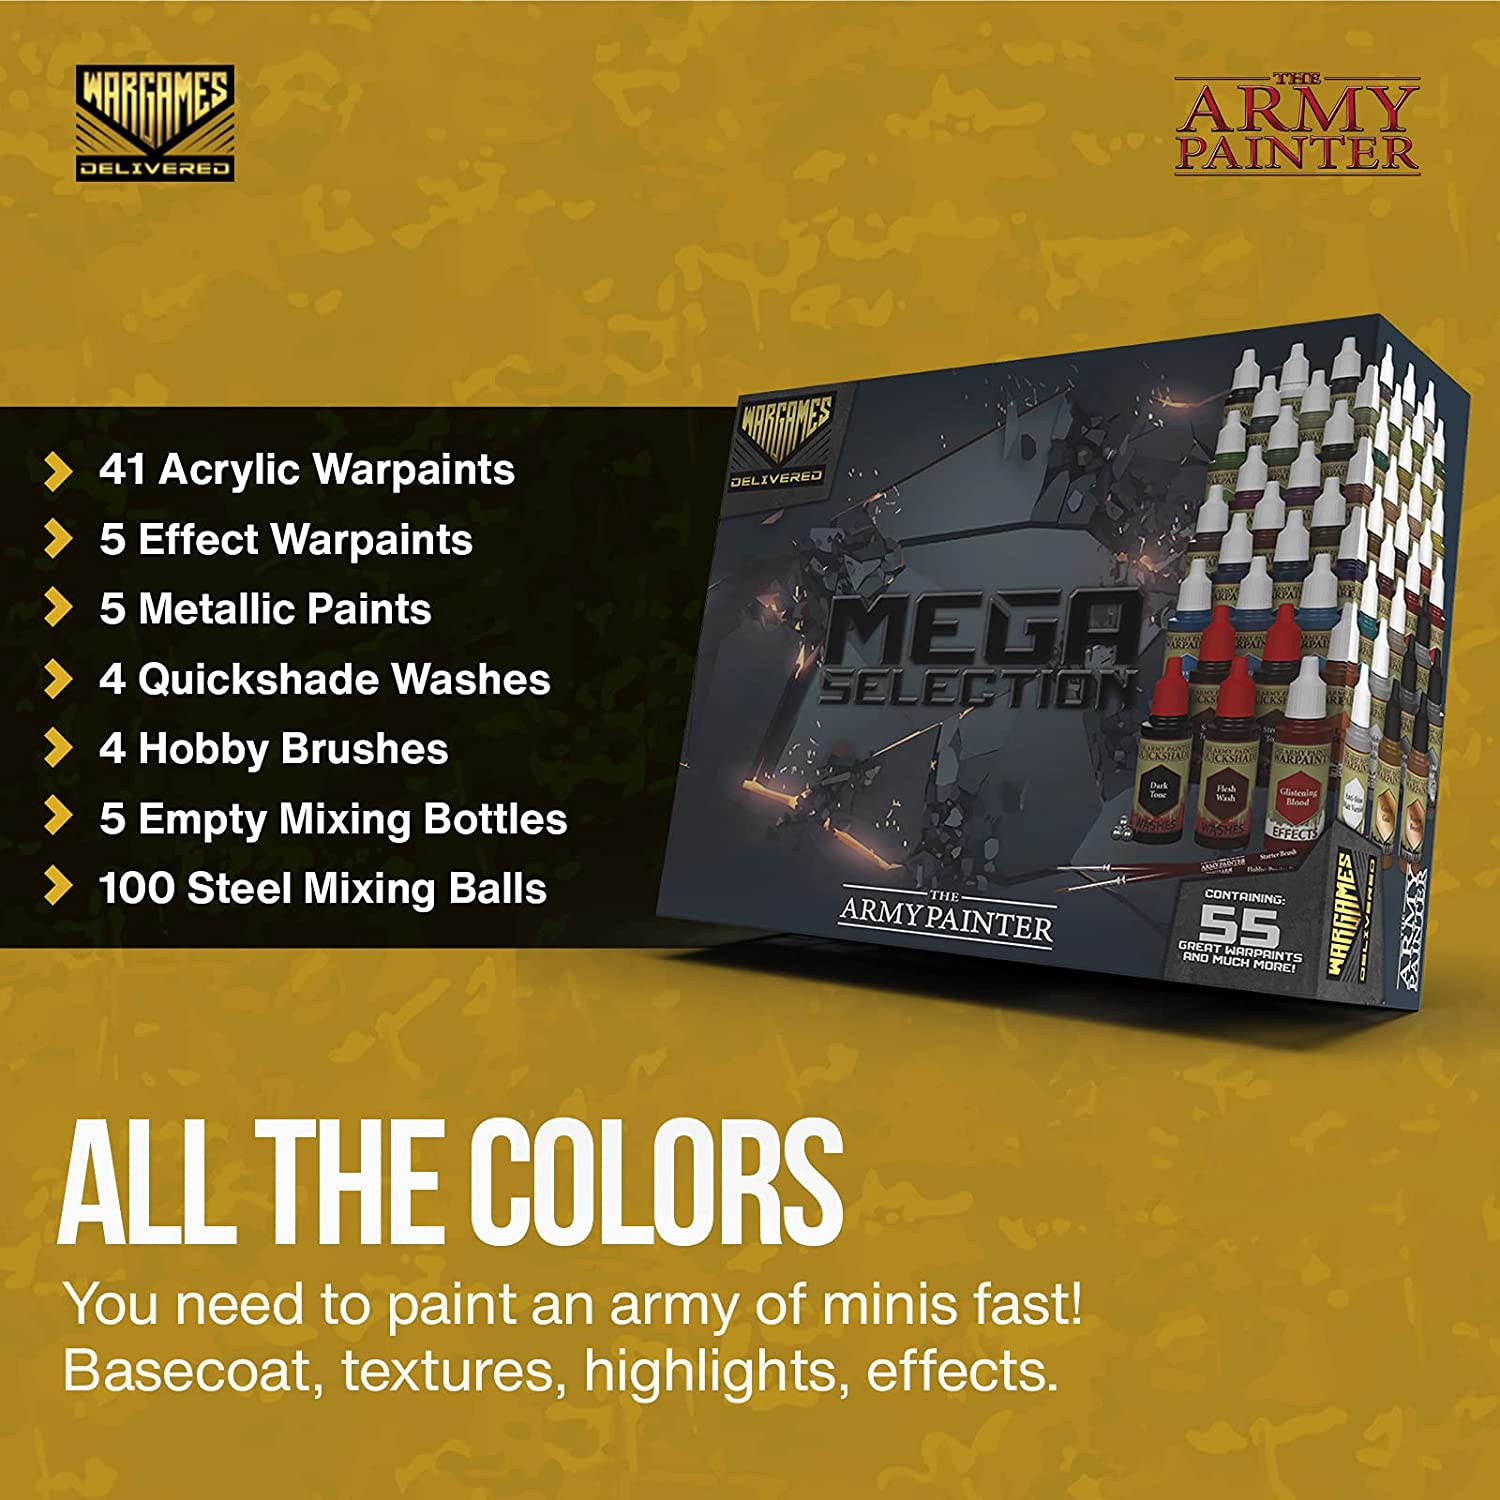 The Army Painter Wargames Delivered Mega Miniature Paint Sets kit